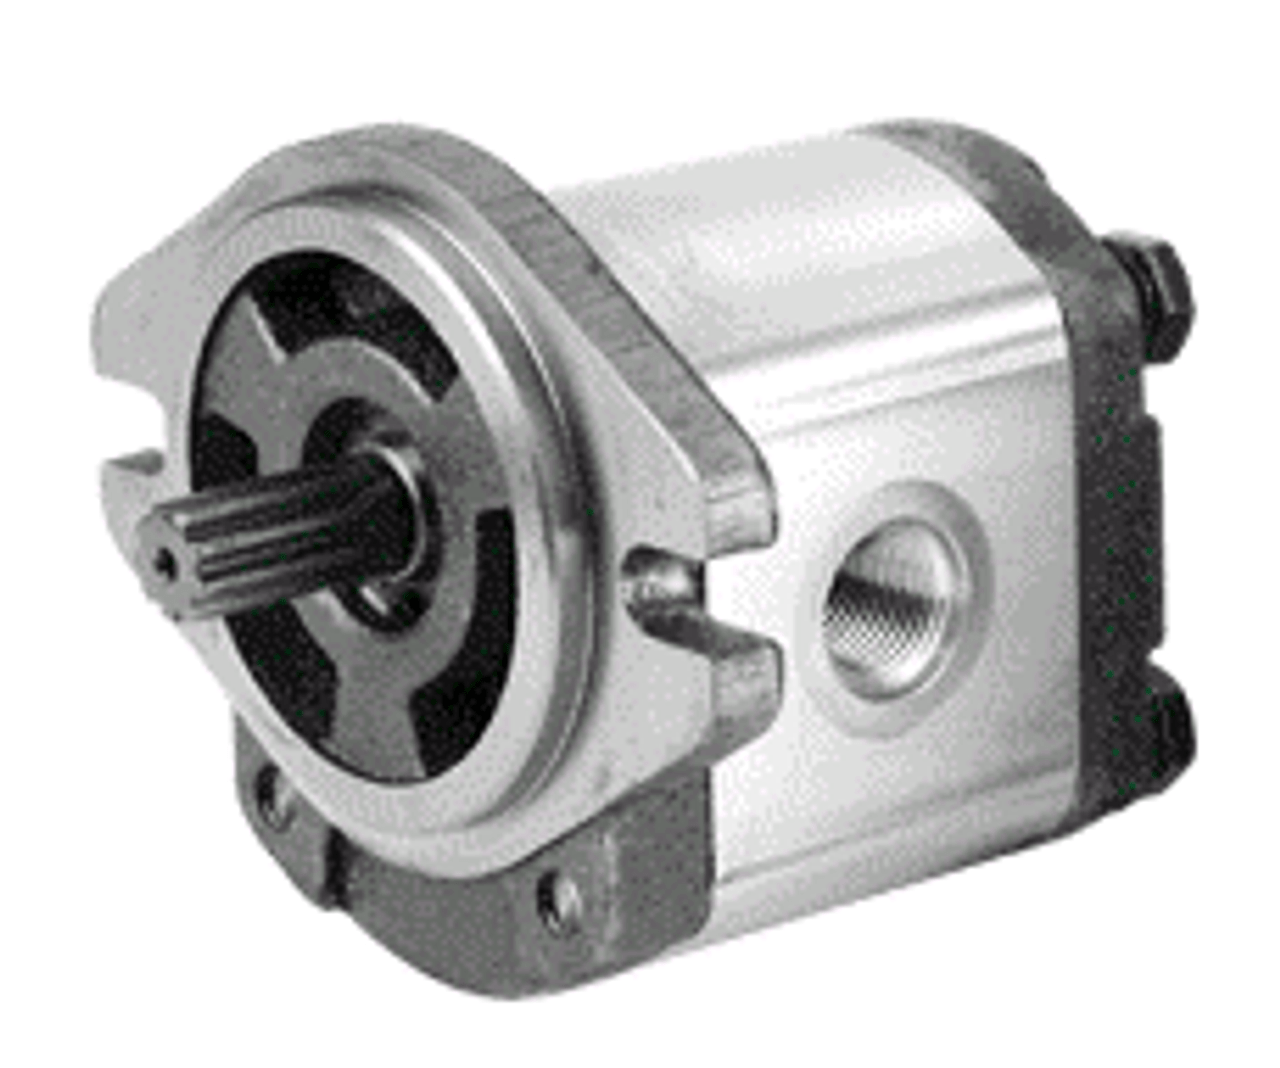 Honor Pumps 2GG2U07L-V Hydraulic gear pump .43 cubic inch displacement 9T spline shaft  Honor Pumps USA